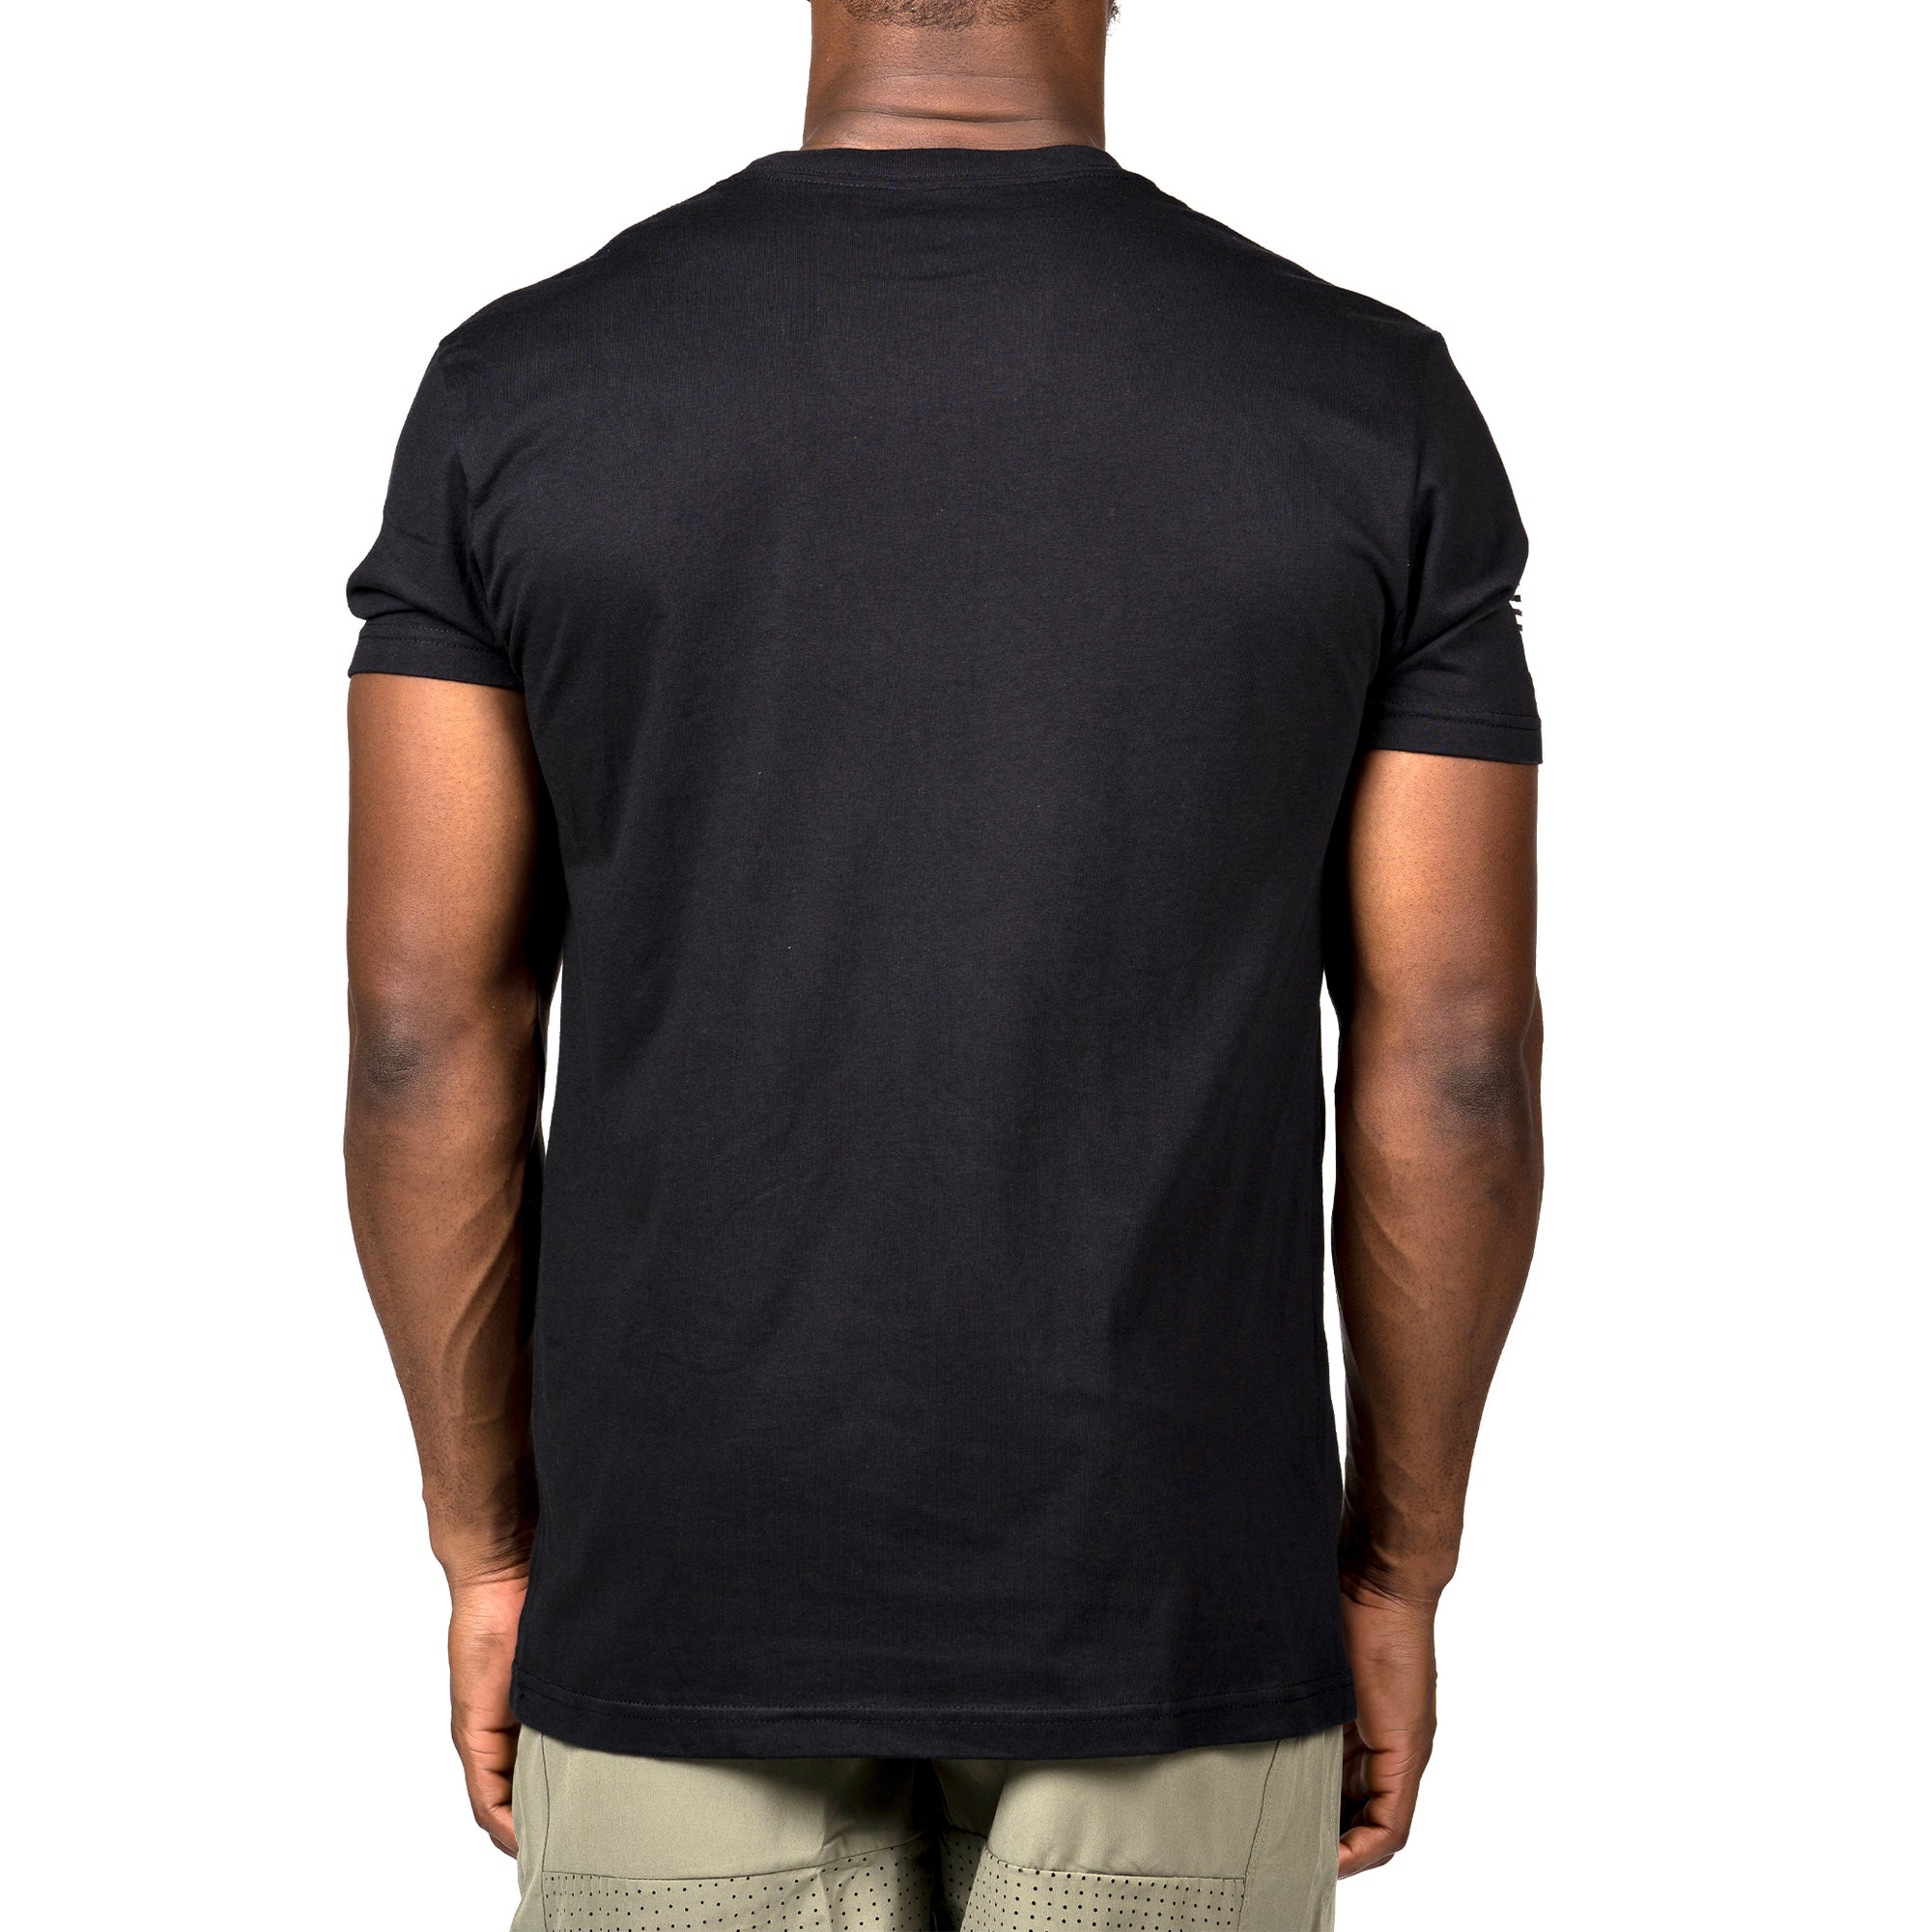 Men's T-Shirt - Genuine Savage - Savage Barbell Apparel